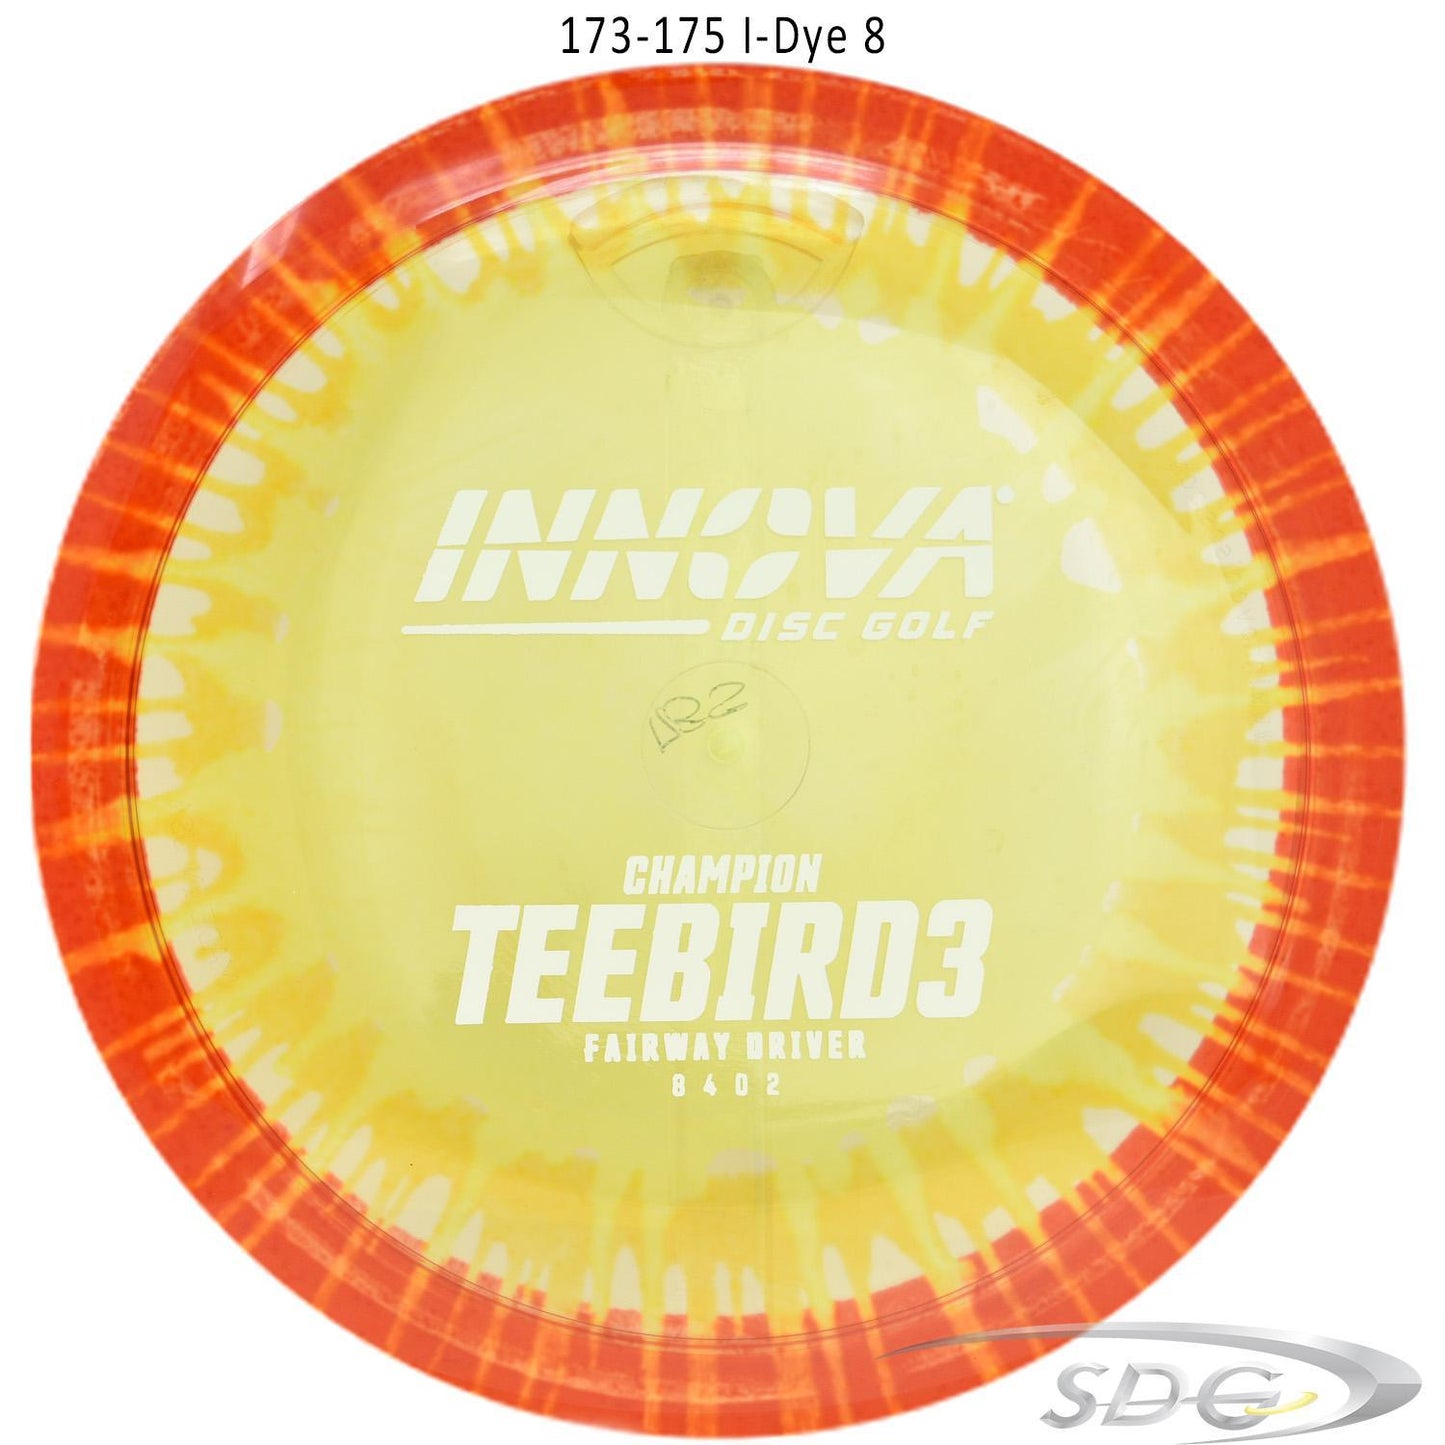 innova-champion-teebird3-i-dye-disc-golf-fairway-driver 173-175 I-Dye 8 